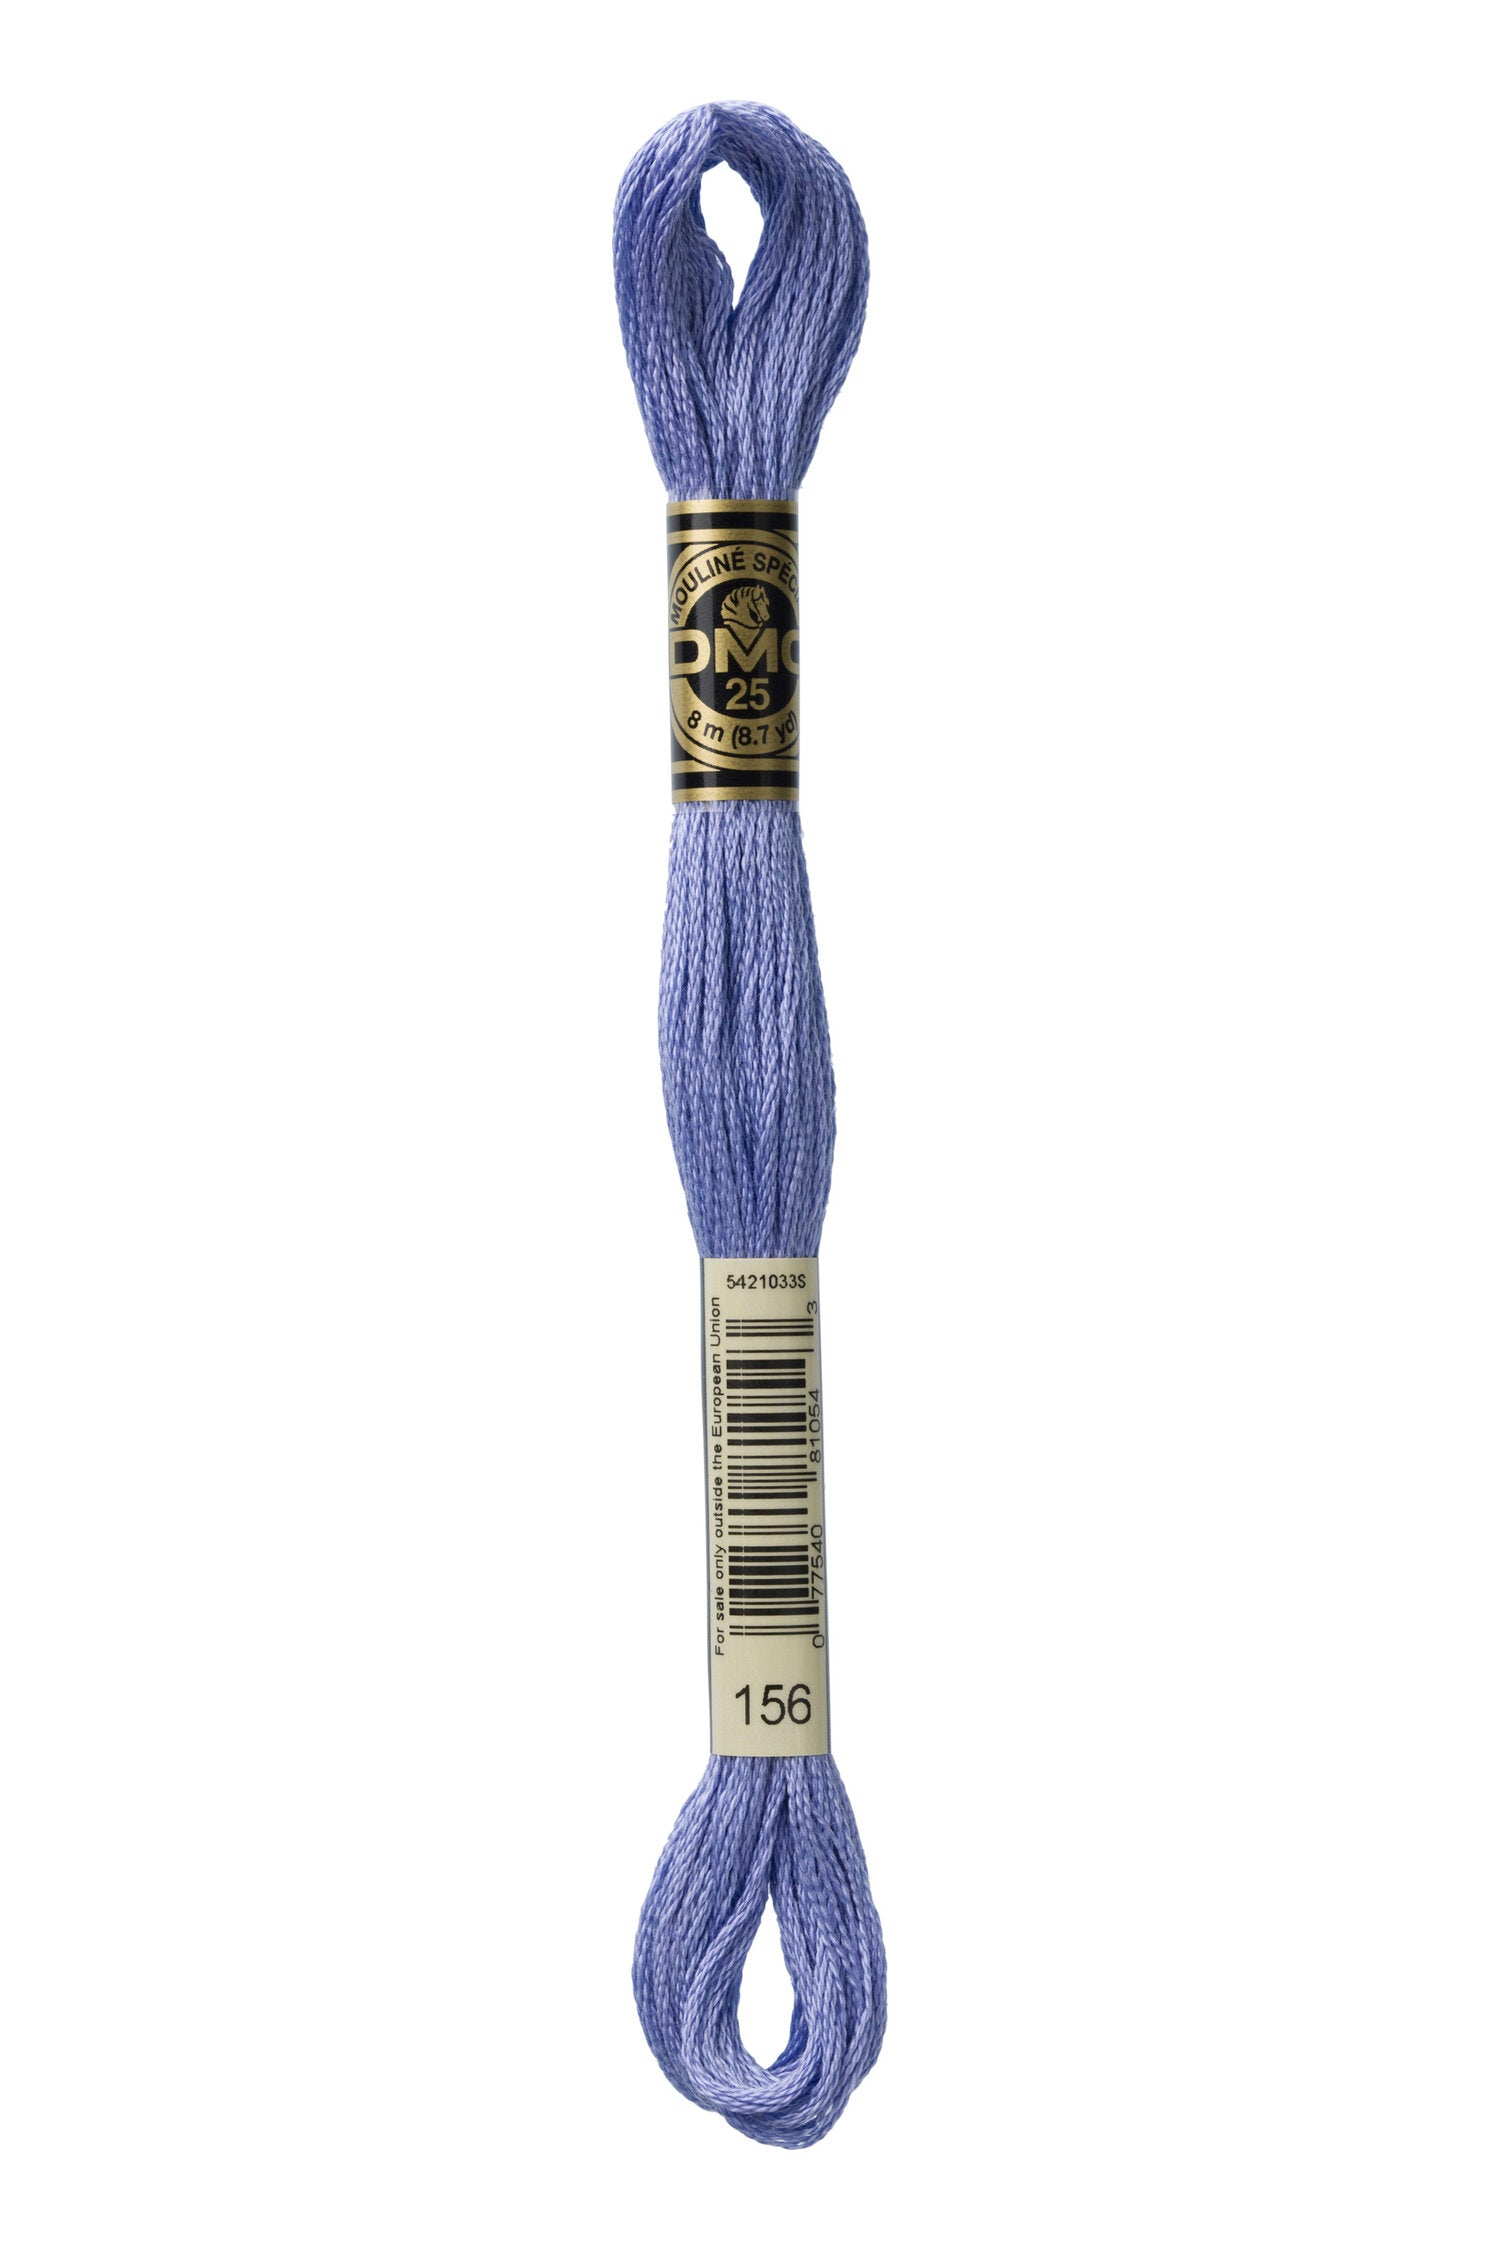 DMC 156 - Blue - Medium - DMC 6 Strand Embroidery Thread, Thread & Floss, Thread & Floss, The Crafty Grimalkin - A Cross Stitch Store